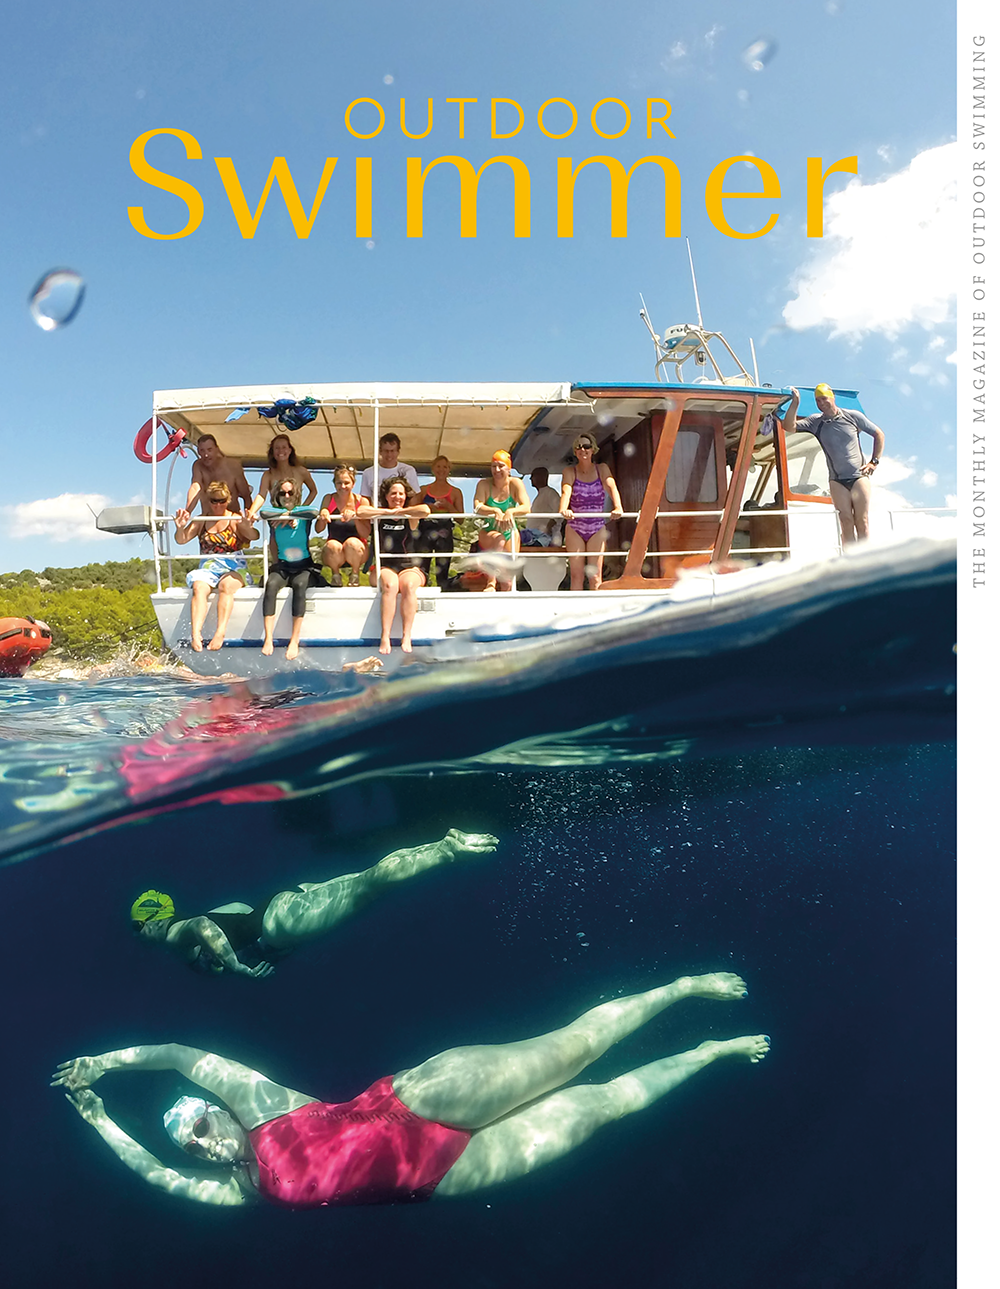 Outdoor Swimmer Magazine - REST & REFLECTION